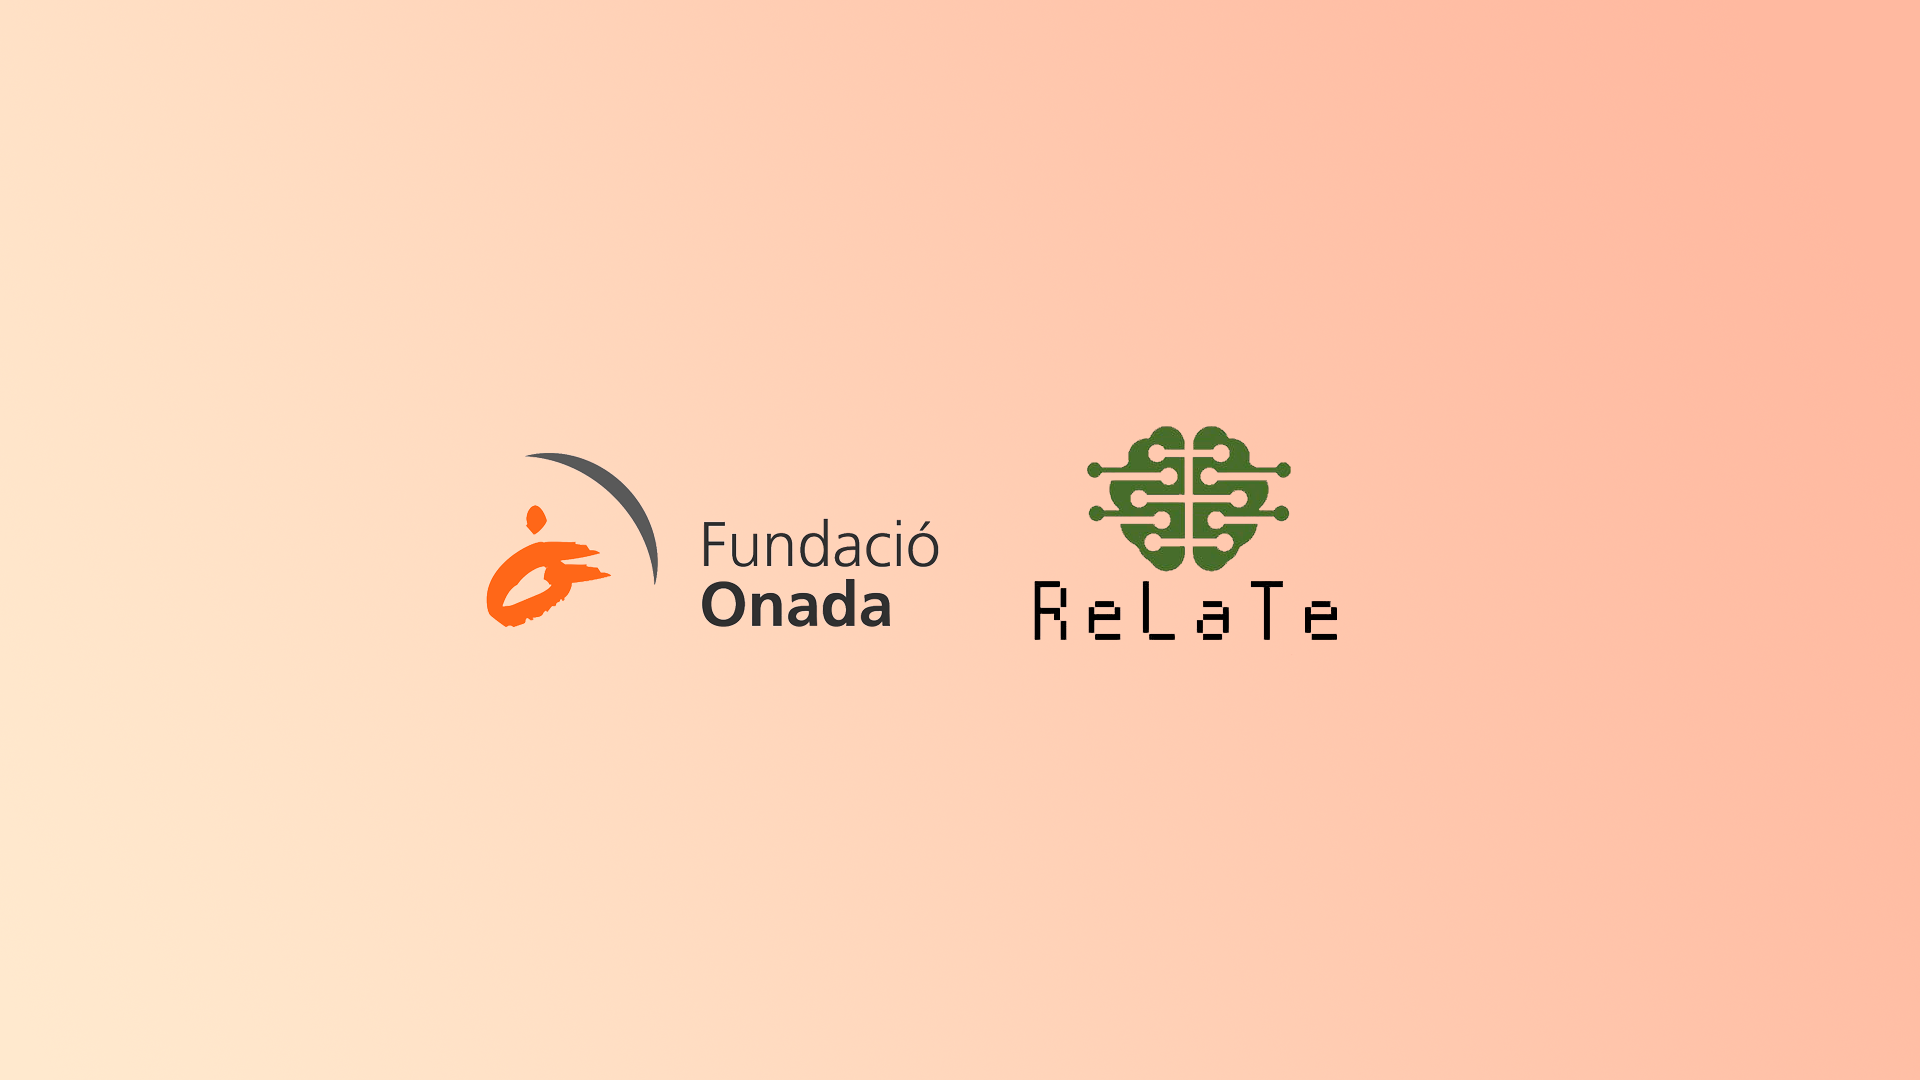 Onada Foundation and ReLaTe logos. 